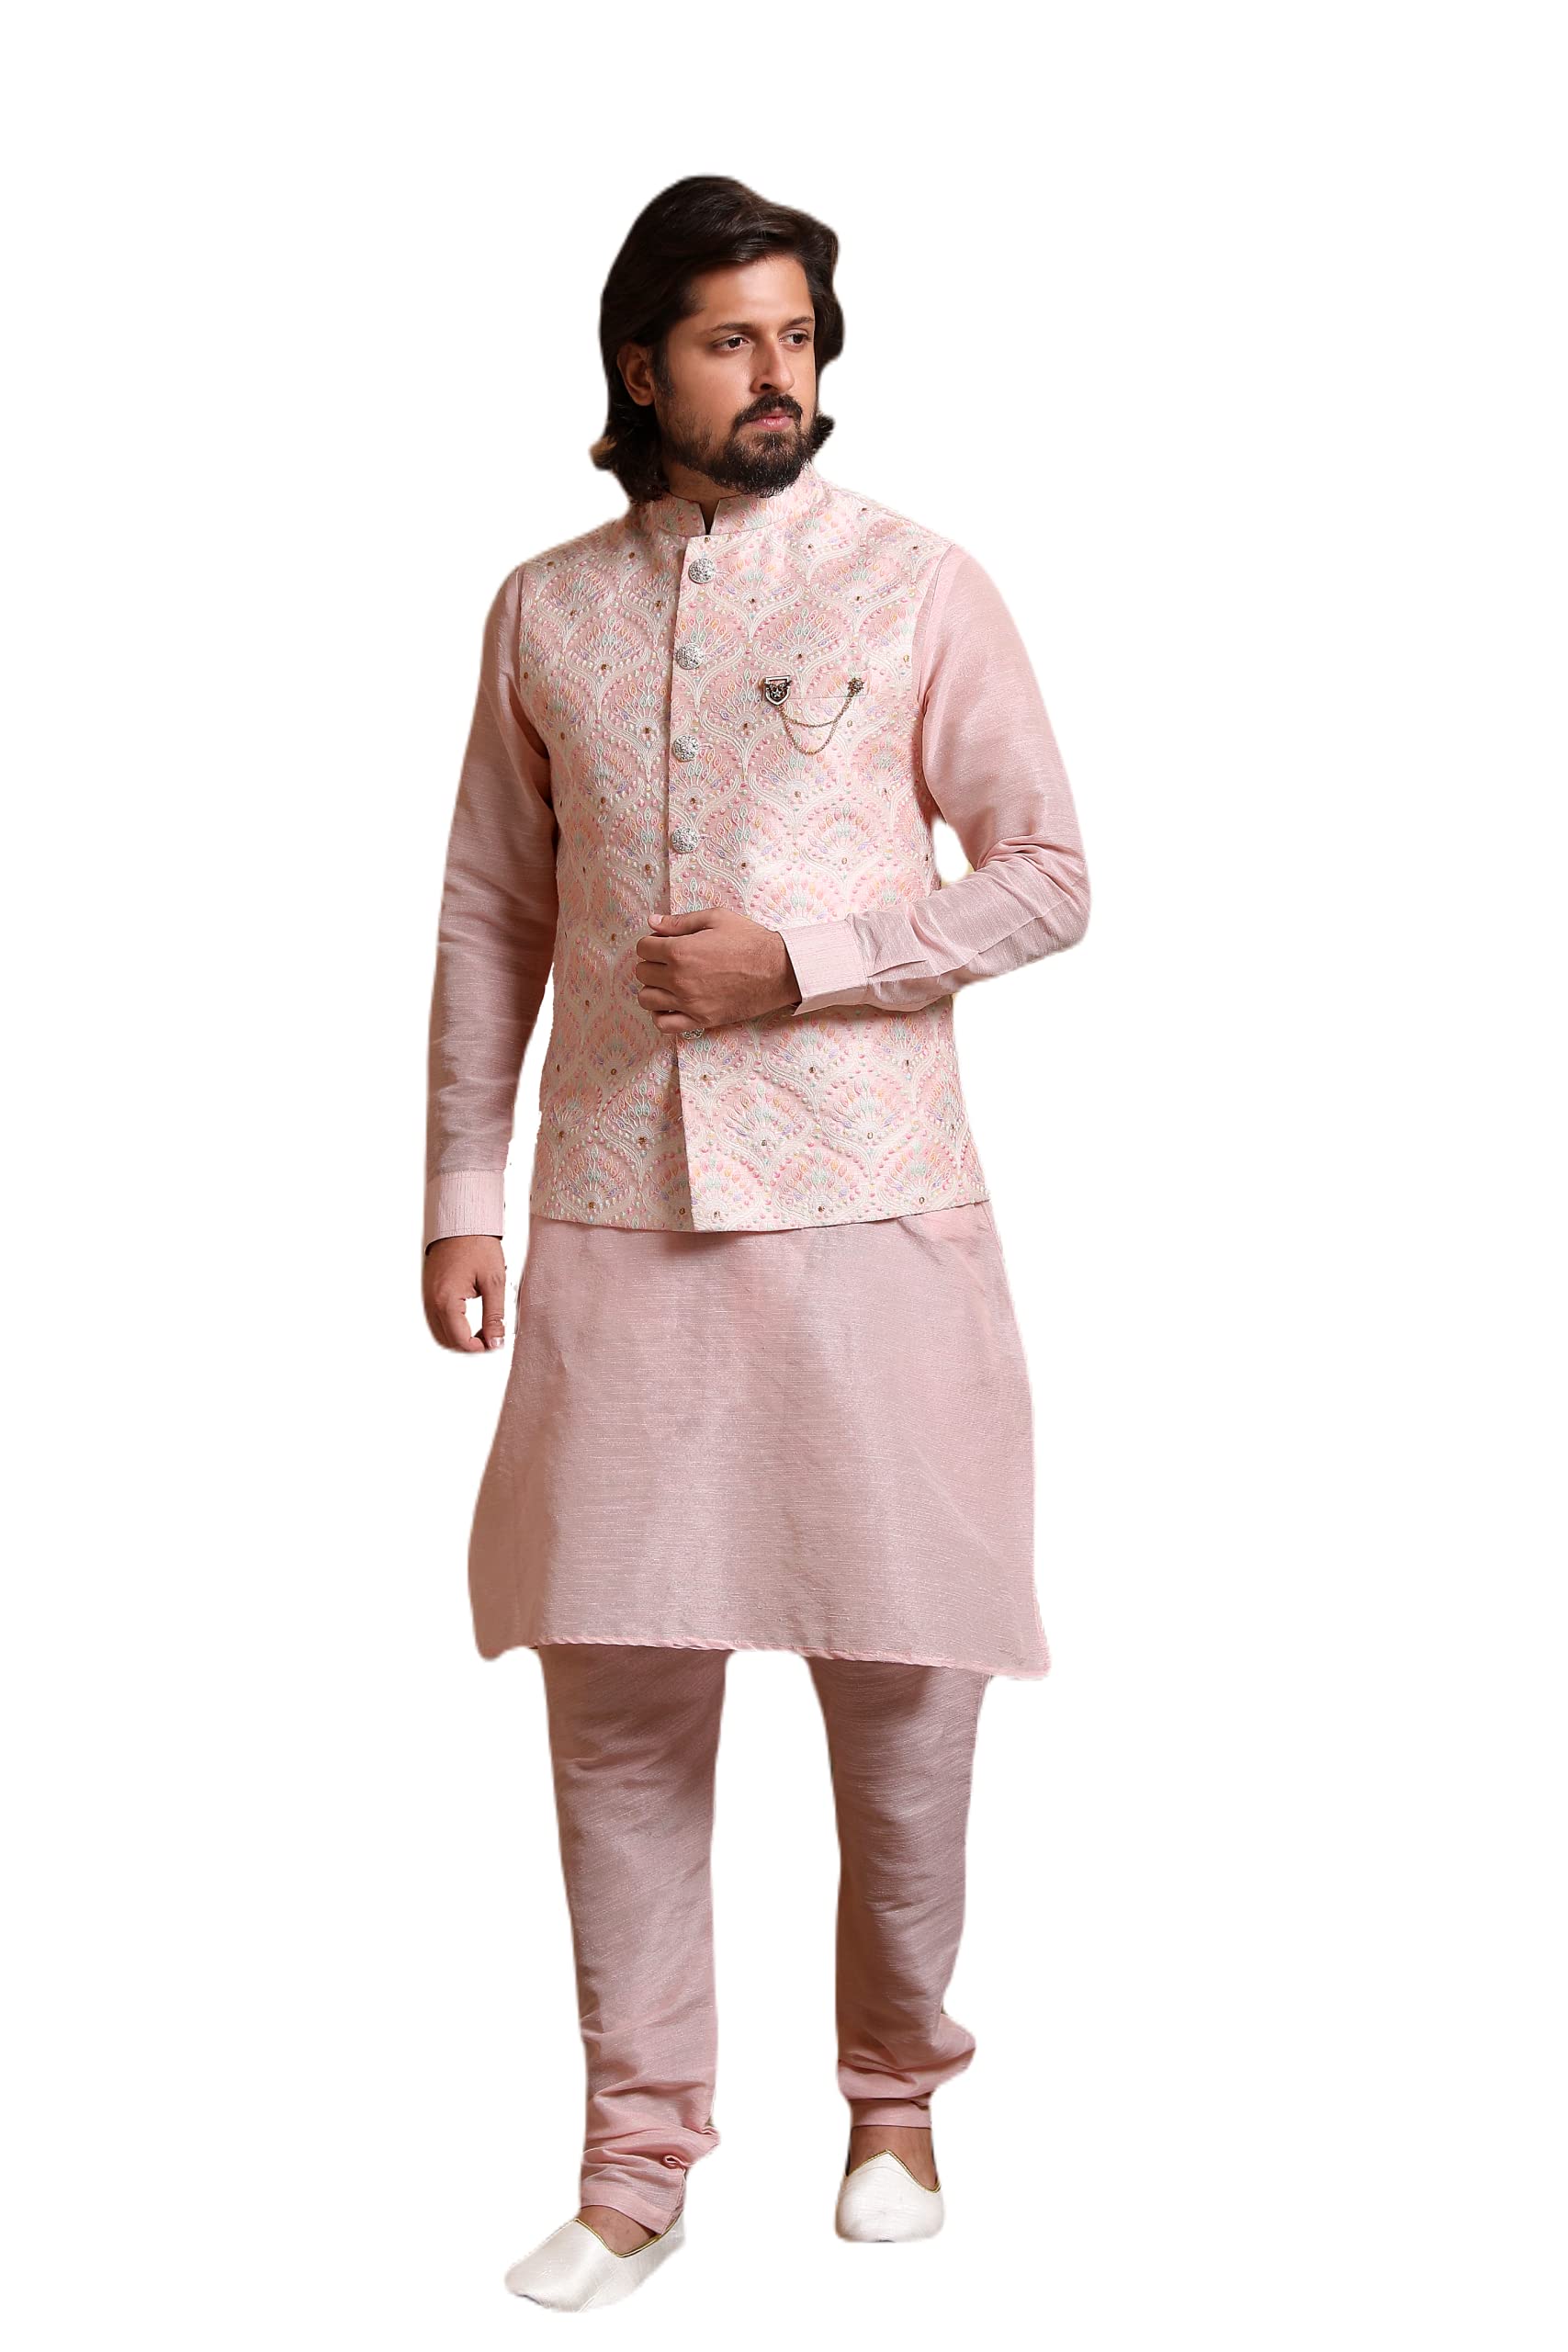 Lady Dwiza Indian Royal Designer Groomsmen Festival Wedding Traditional Jodhpuri Kurta Pyjama With Nehru Jacket for Men